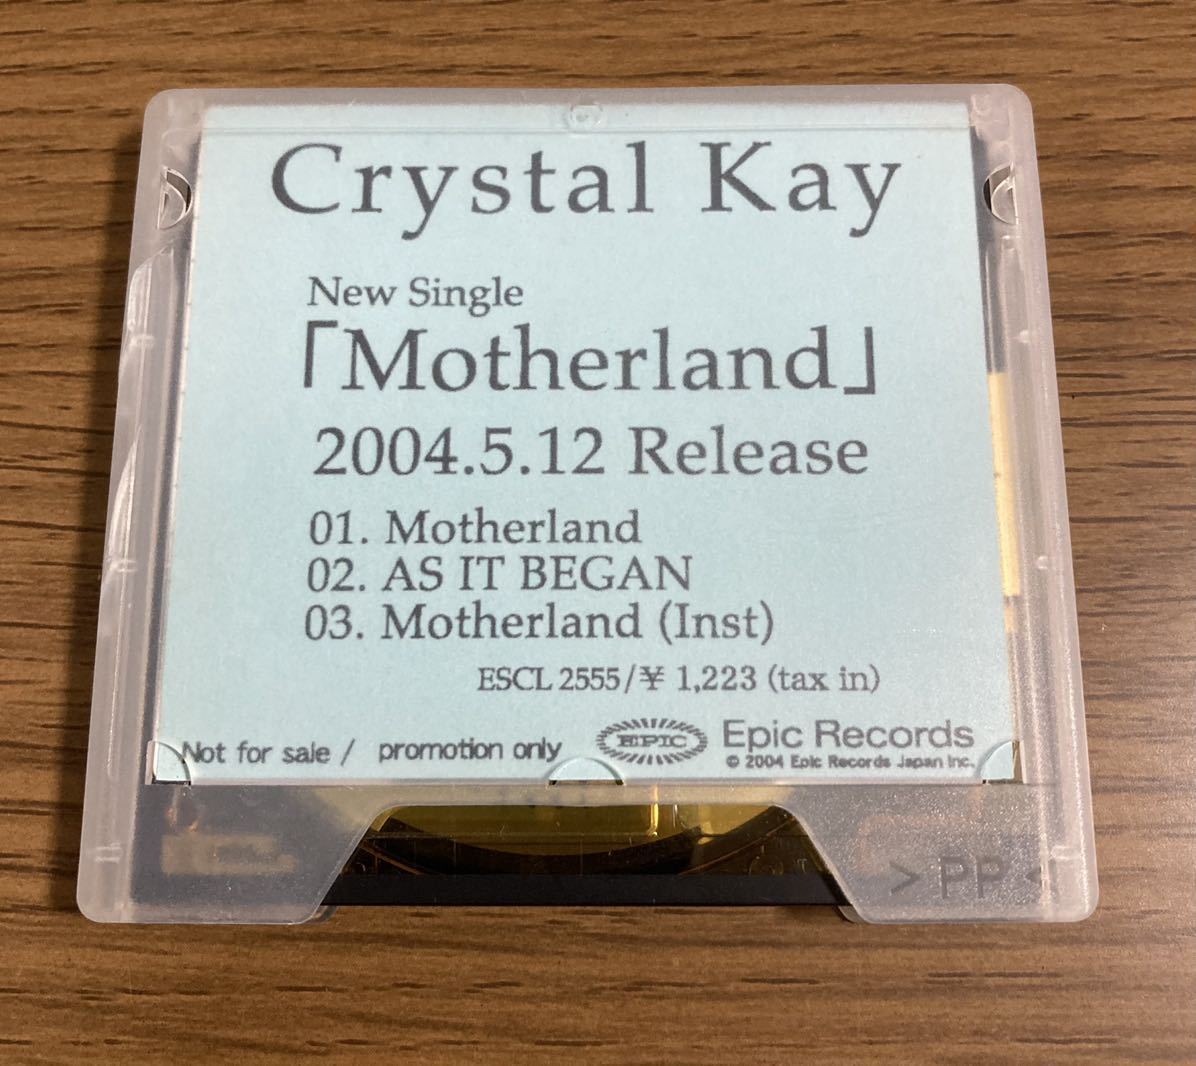   товара нет в свободной продаже  MD Crystal Kay Motherland   кристалл ... ...  образец   ...  pro ...  редкий   ретро   mini  диск  mini disc 